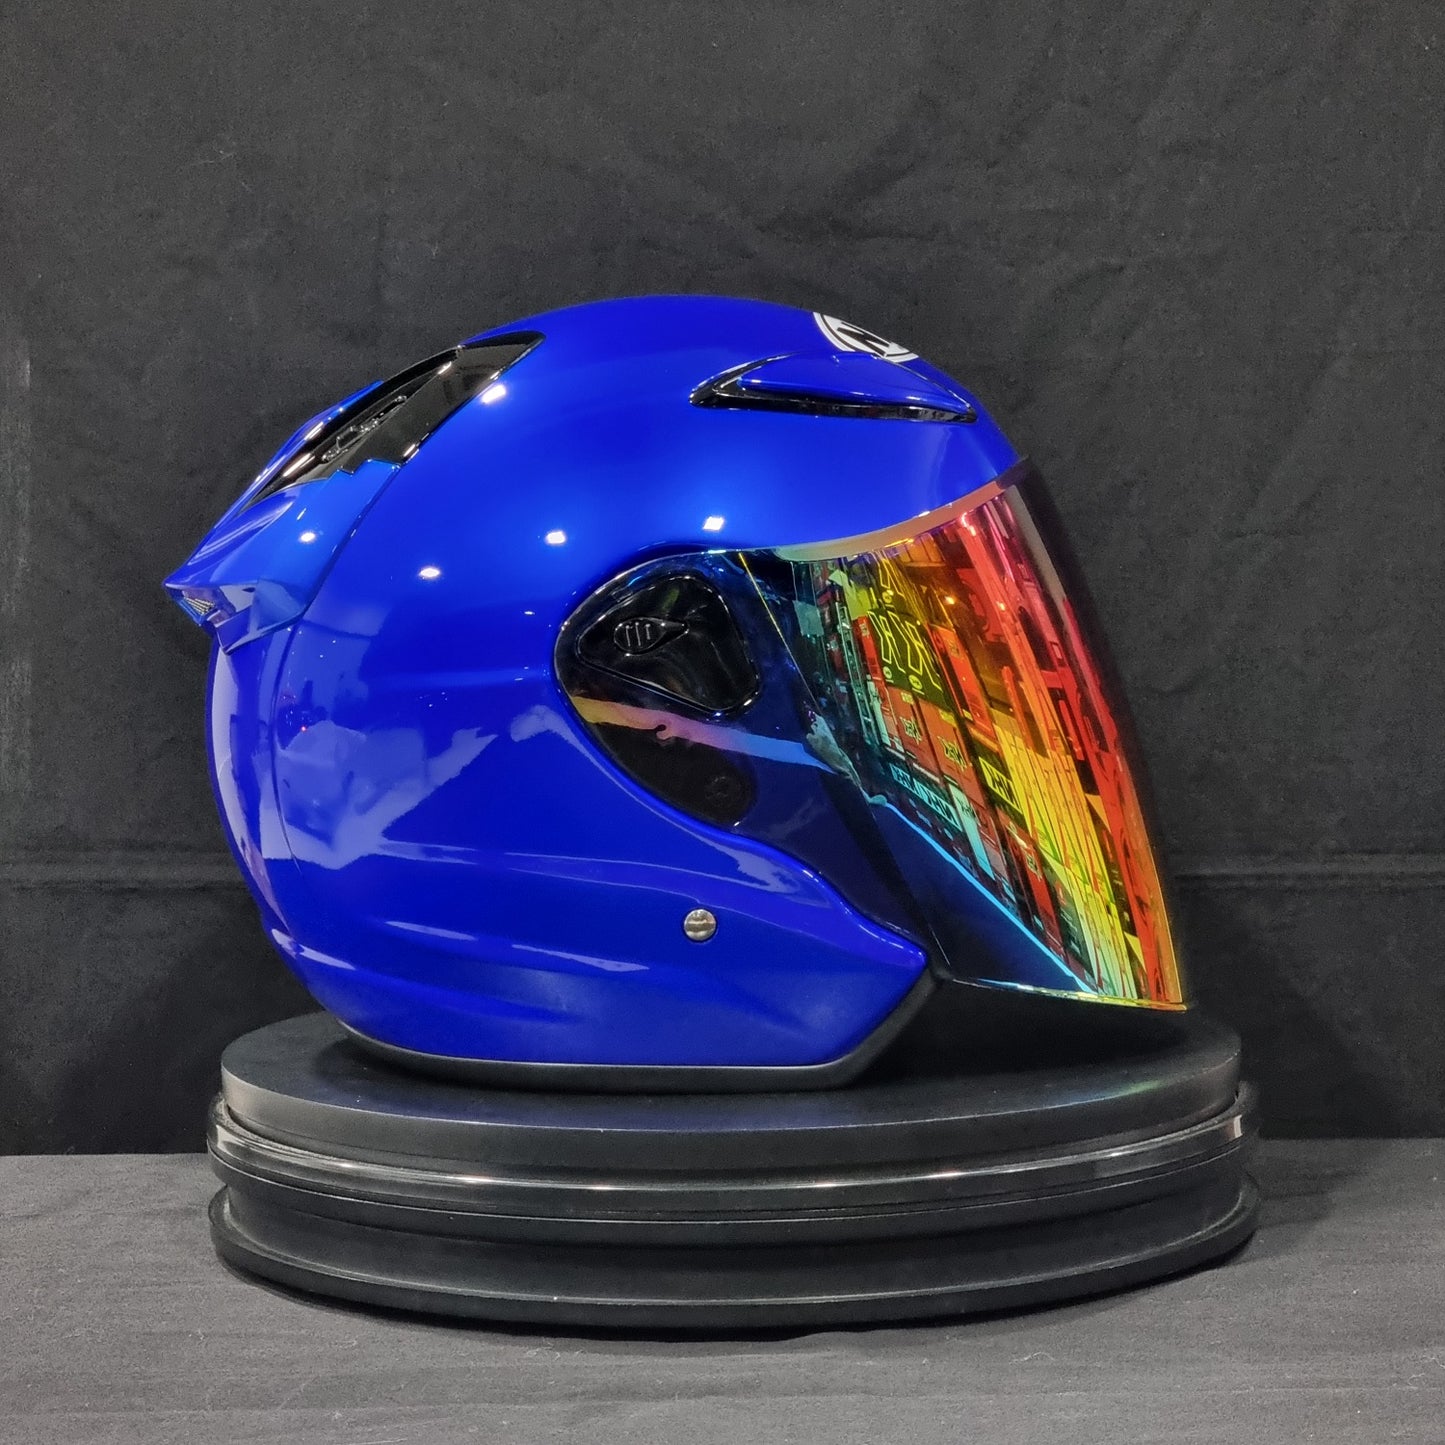 NHK Helmet R6 v2 Solid (Candy Blue Glossy)